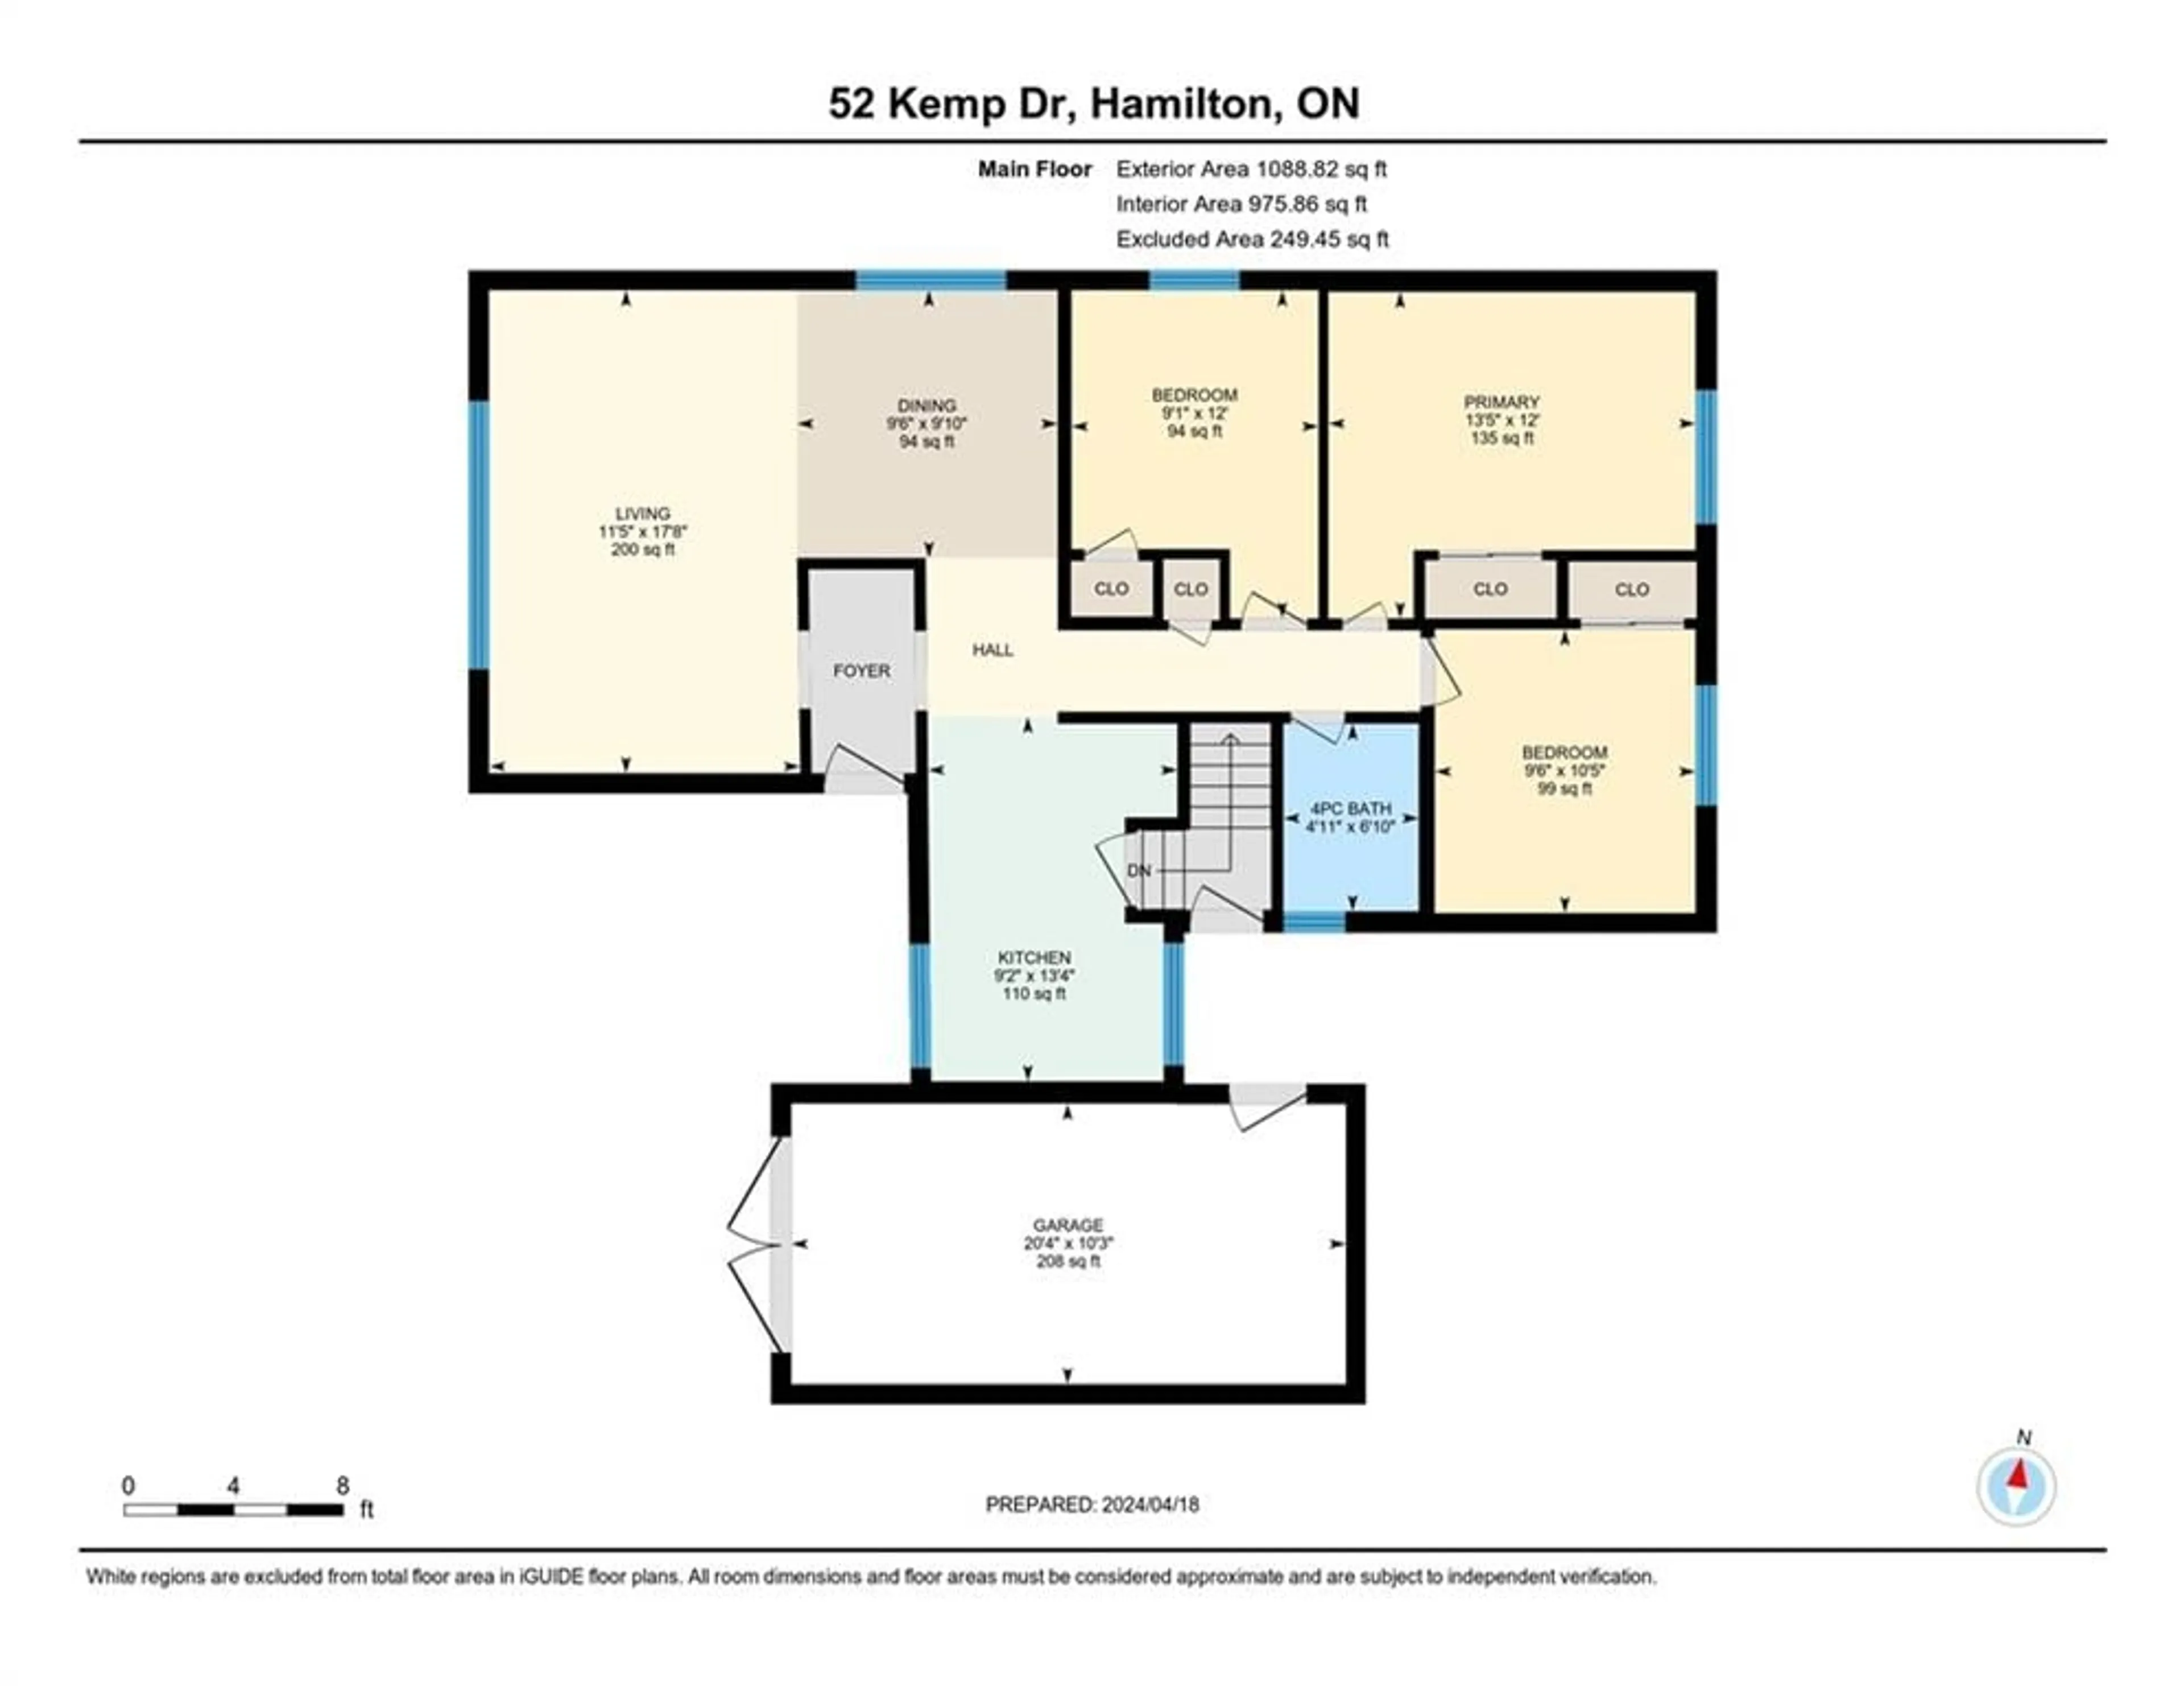 Floor plan for 52 KEMP Dr, Dundas Ontario L9H 2M9